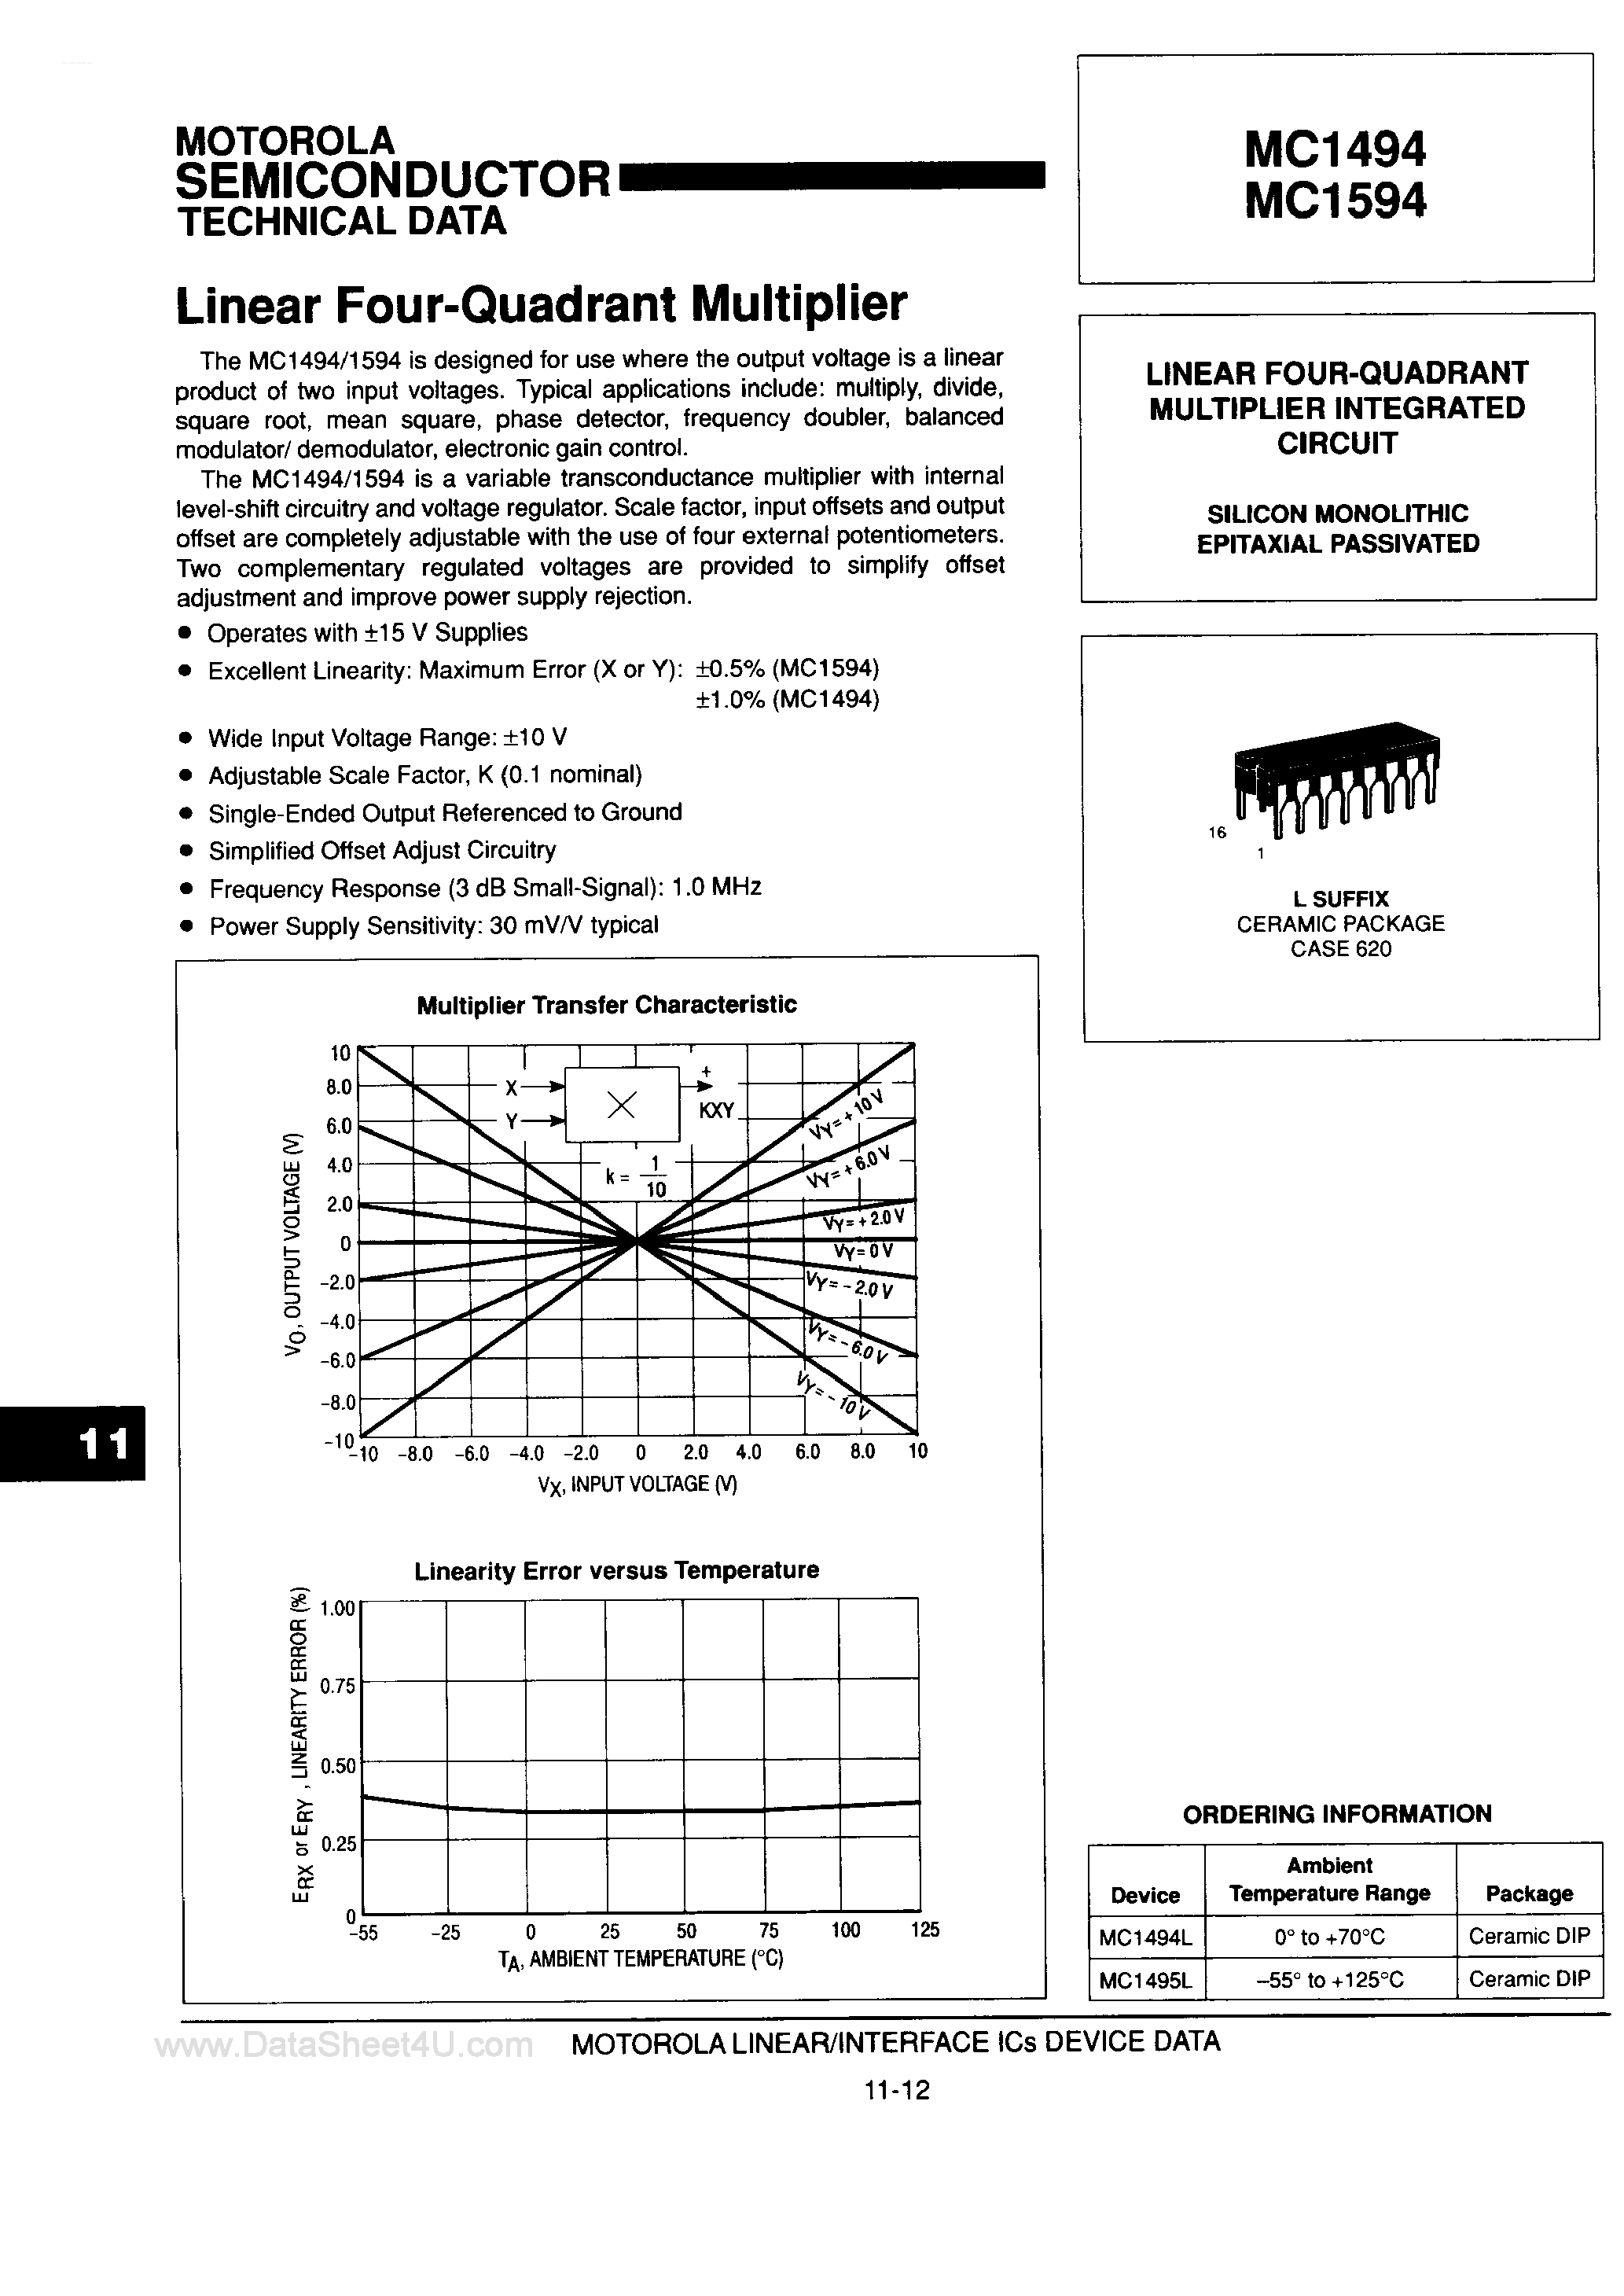 Datasheet MC1494 - (MC1494 / MC1594) Linear 4-Quadrant Multiplier page 1